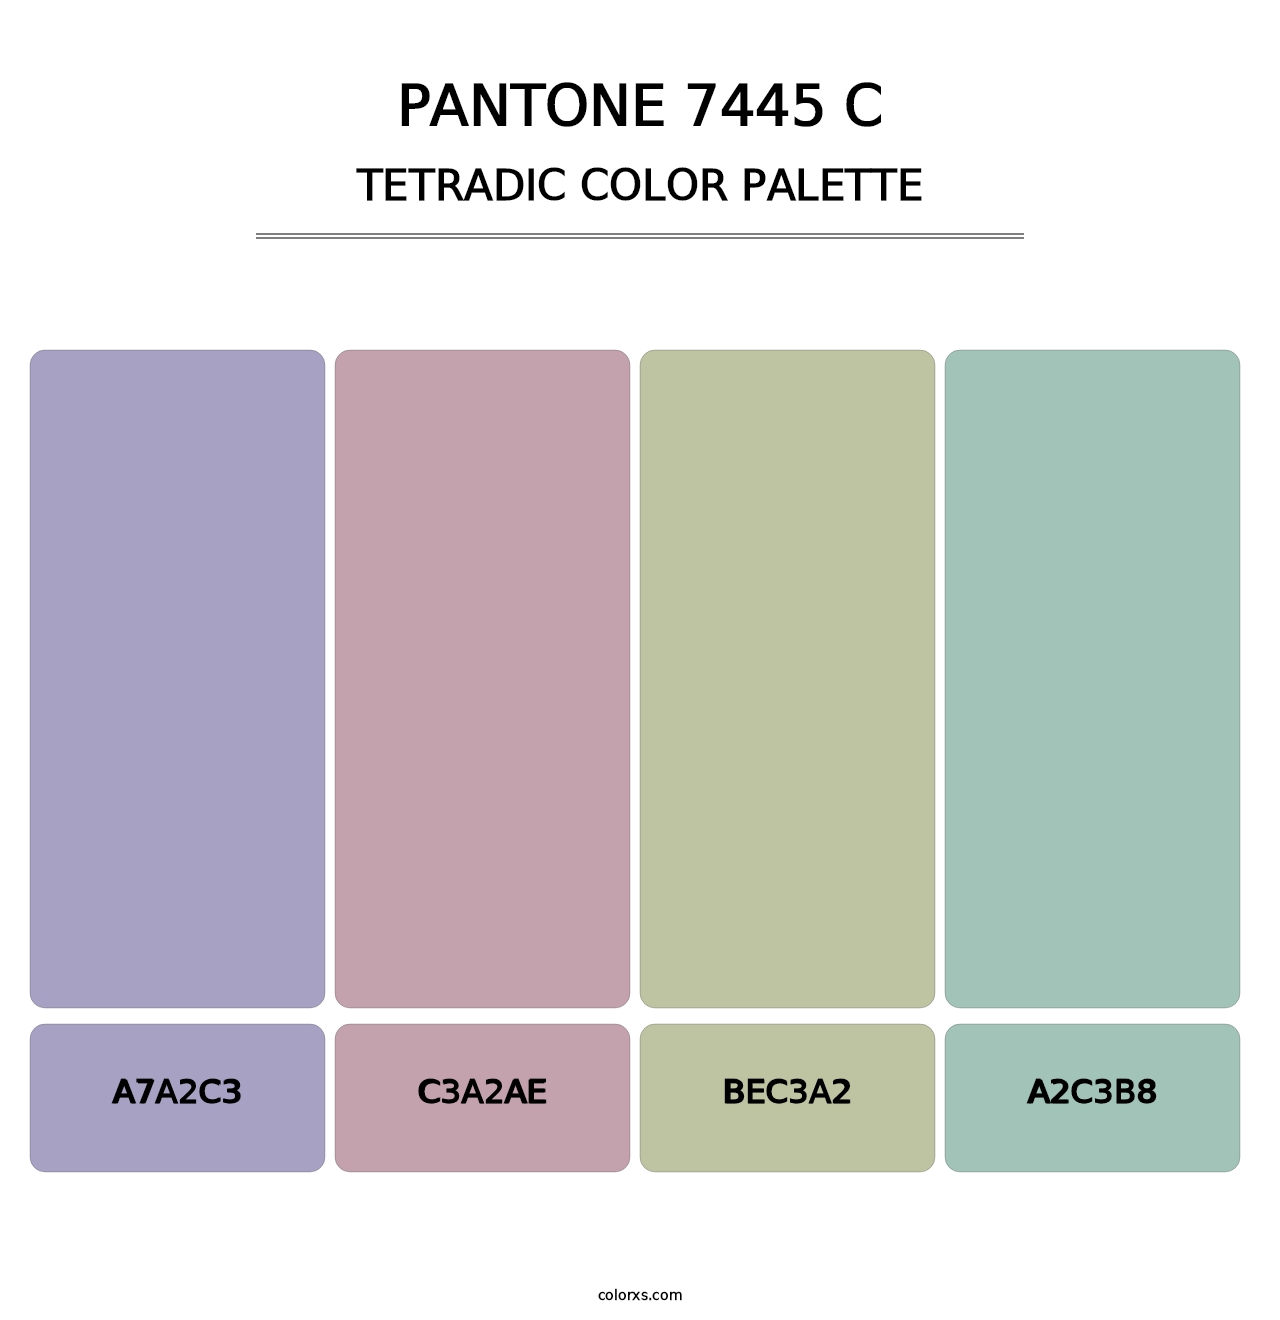 PANTONE 7445 C - Tetradic Color Palette